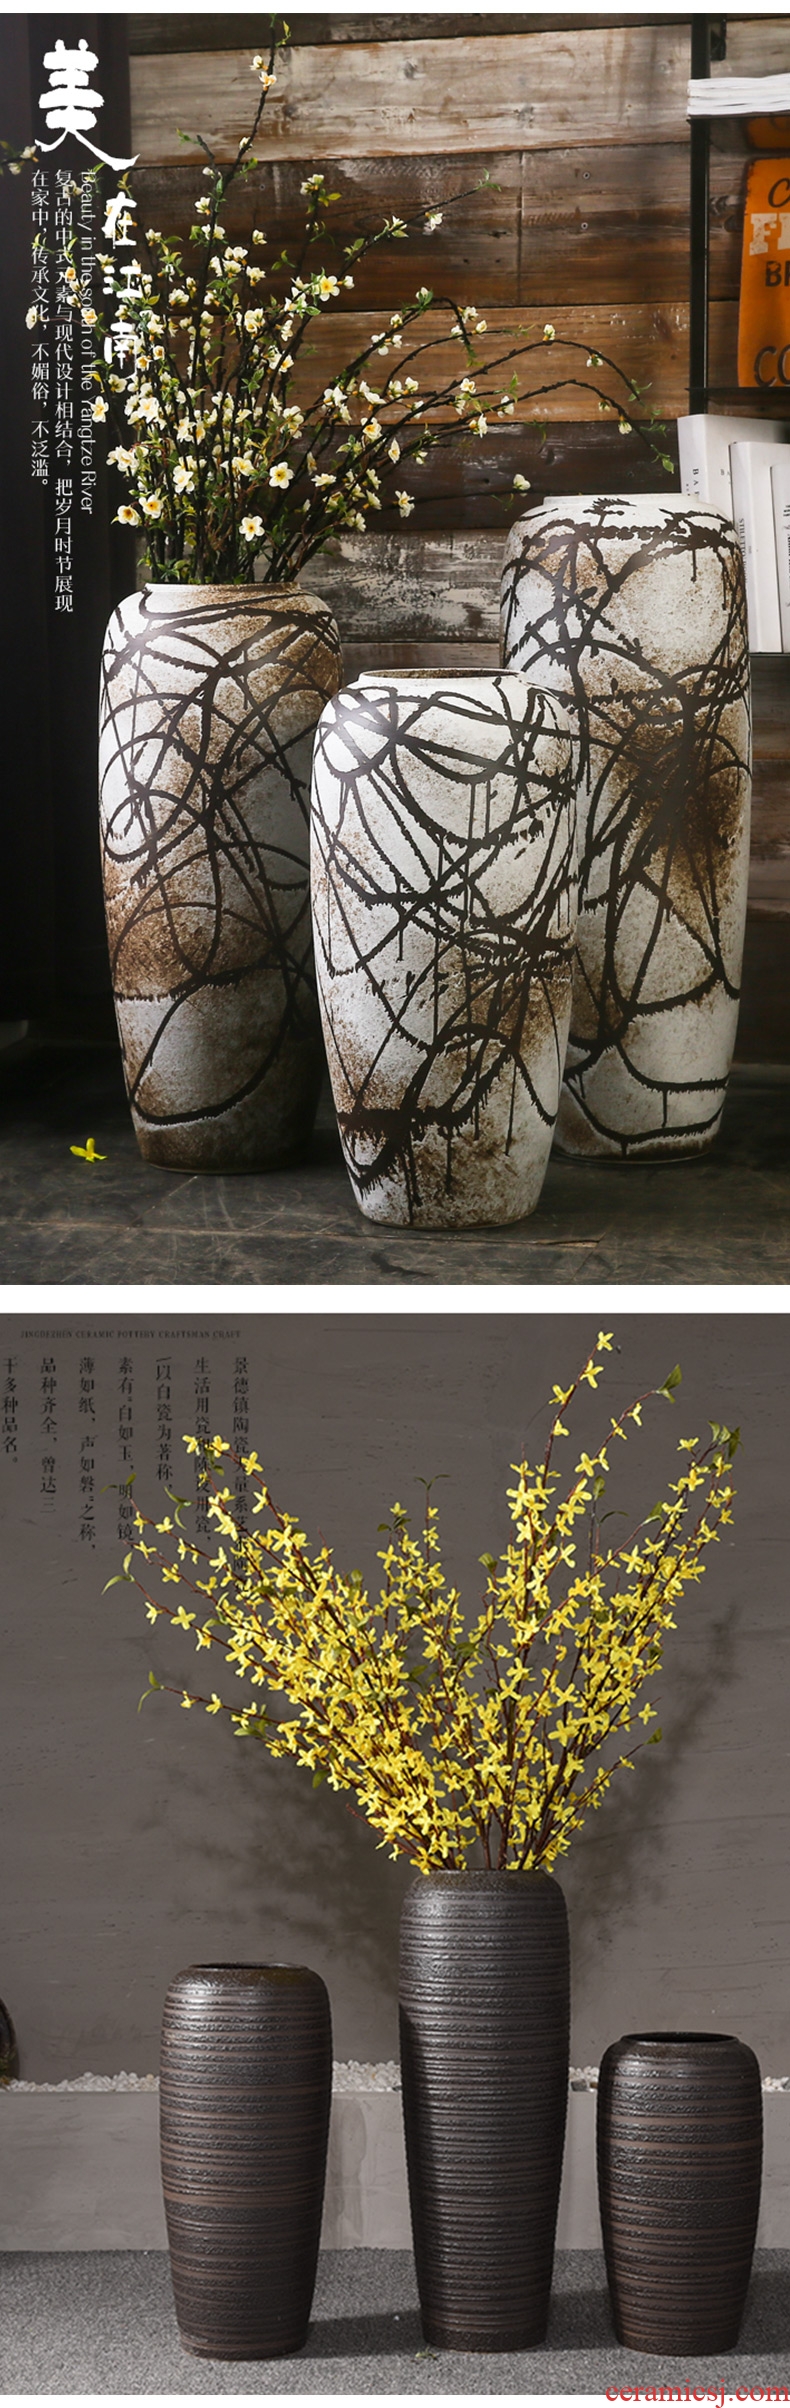 Antique hand - made porcelain of jingdezhen ceramics youligong double elephant peach pomegranate flower vase decoration - 600530502358